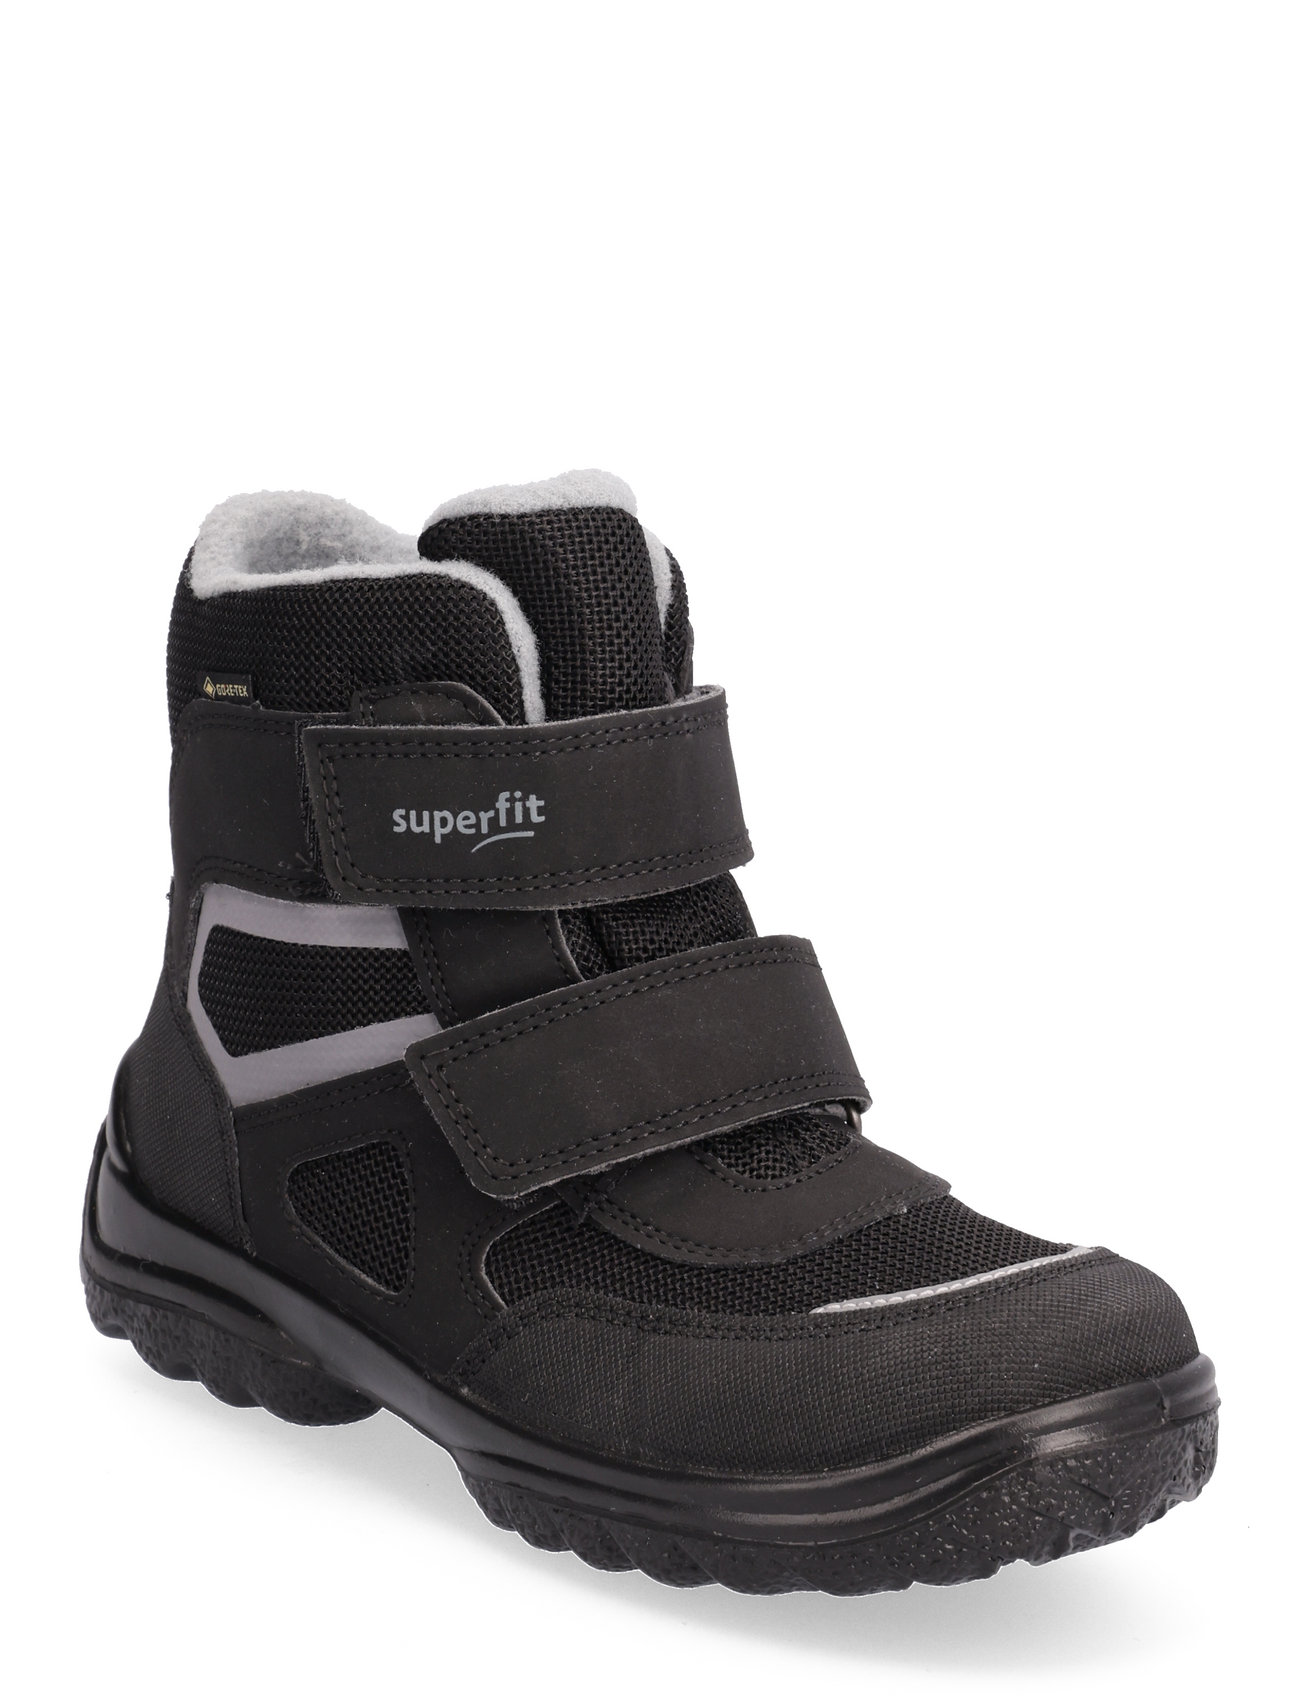 Superfit Snowcat - Winter boots - Boozt.com